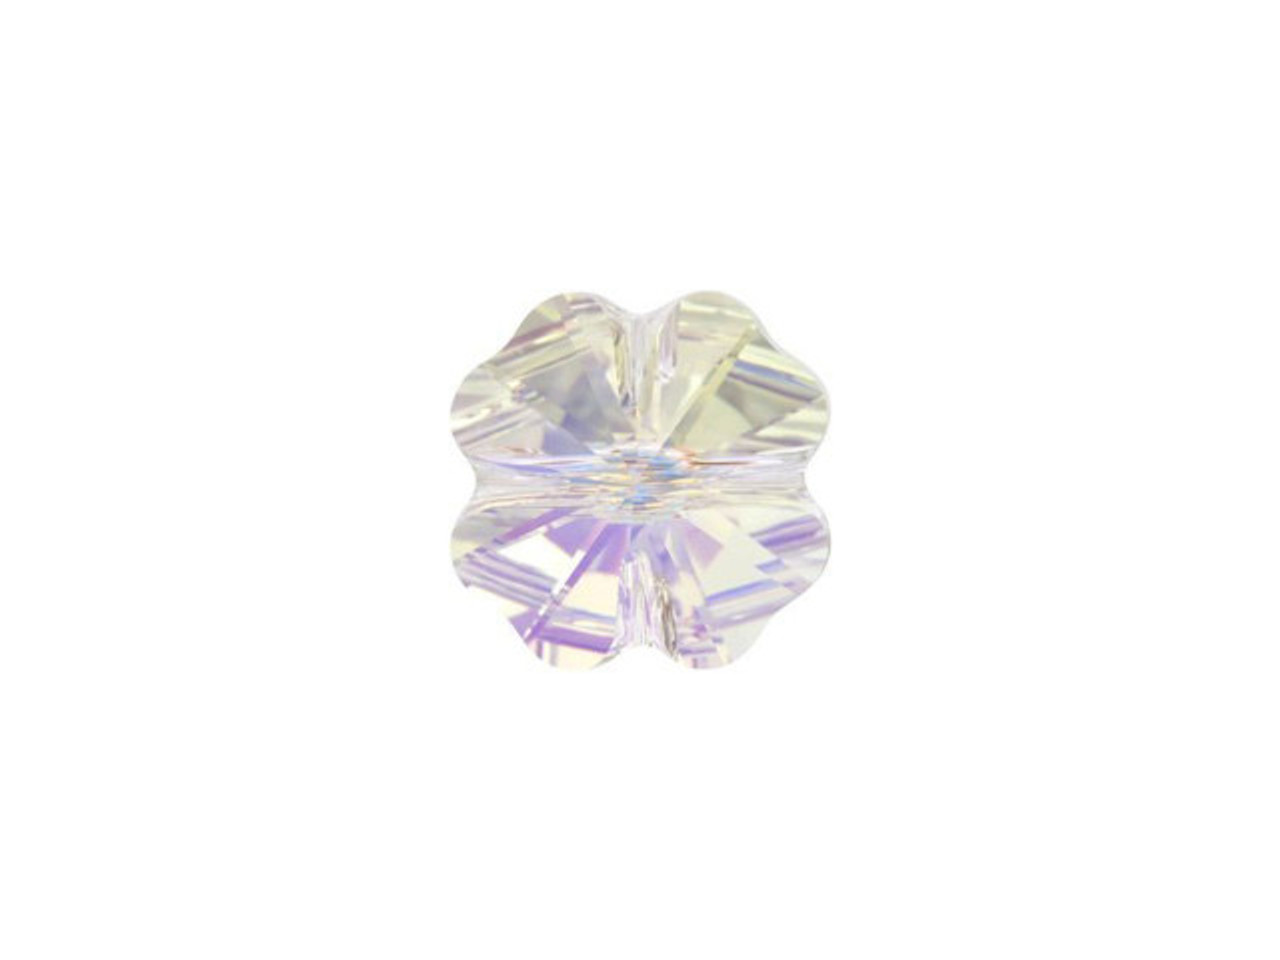 Czech Glass 12x8mm Medium Leaf Beads - Crystal Transparent with